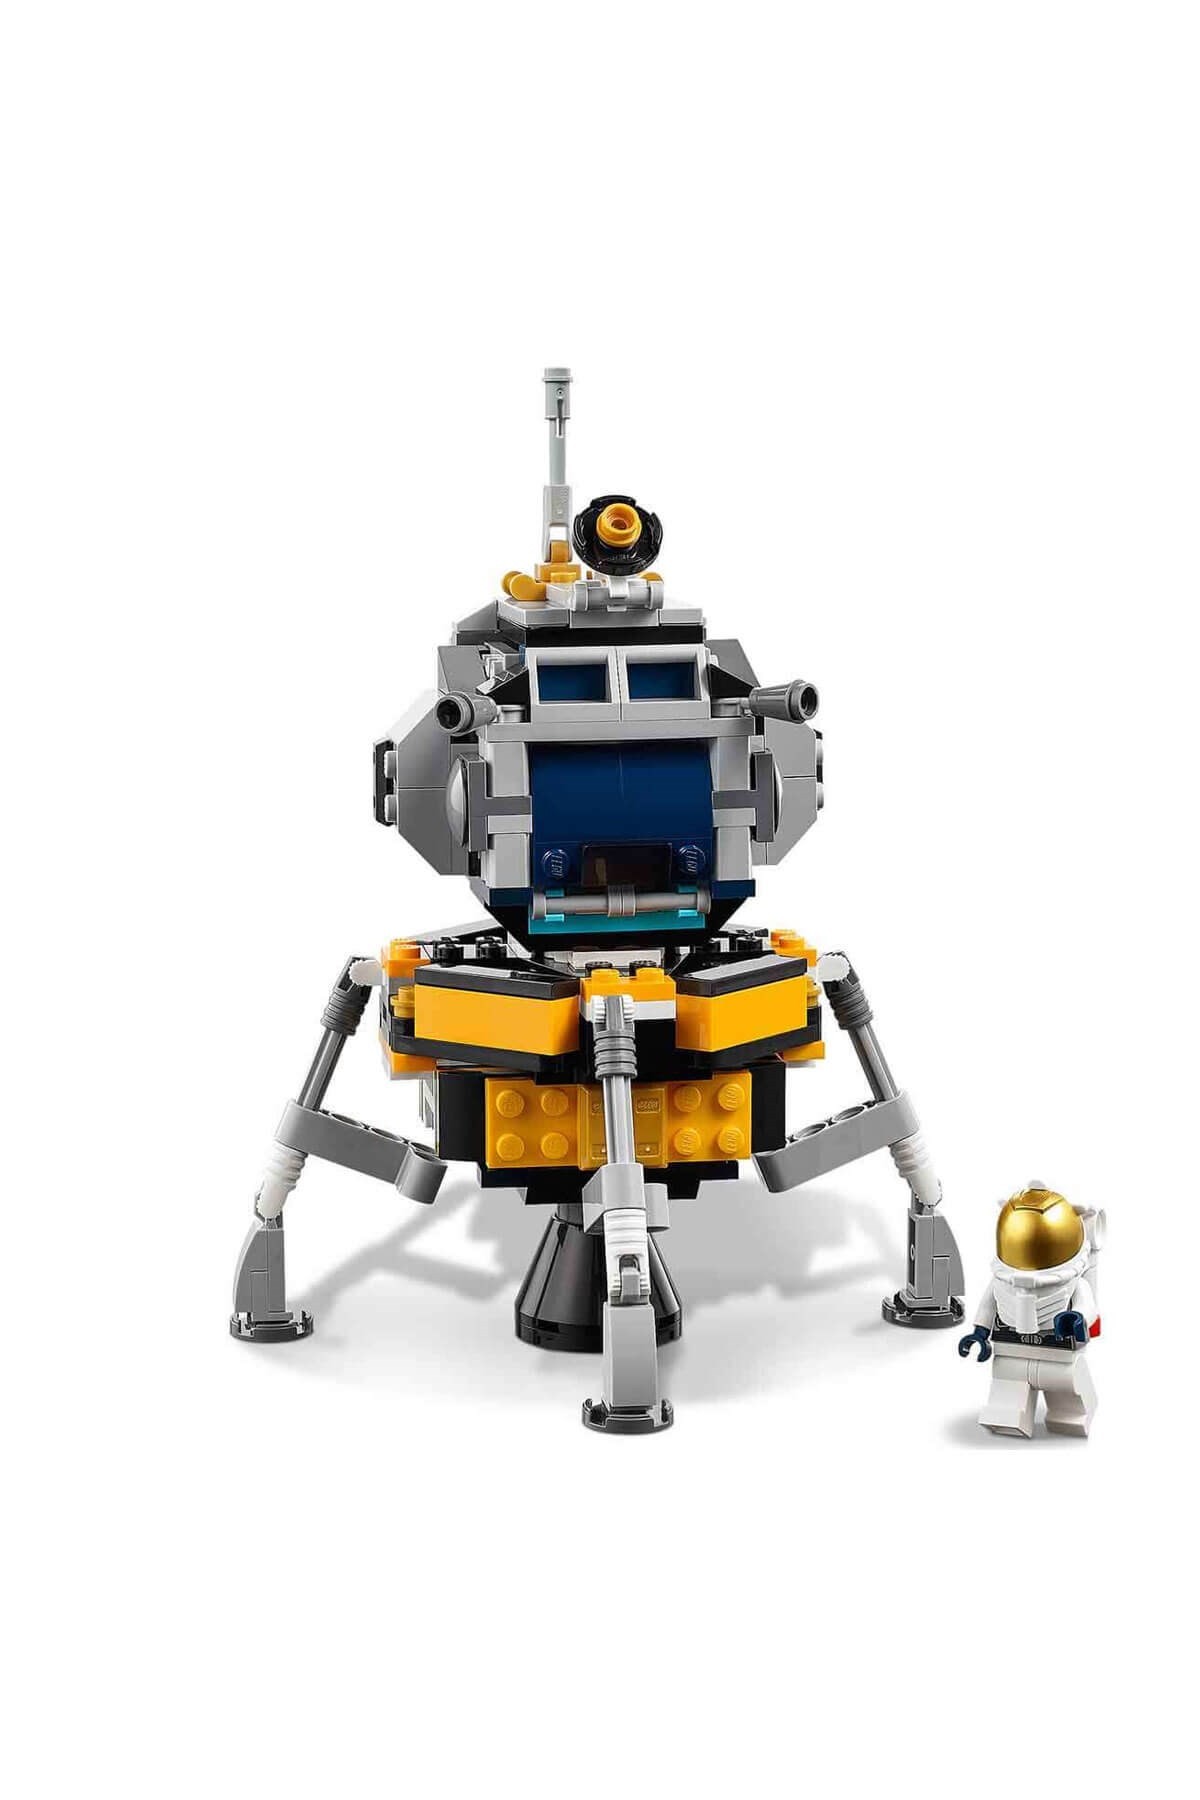 Lego Creator Space Shuttle Adventure 31117